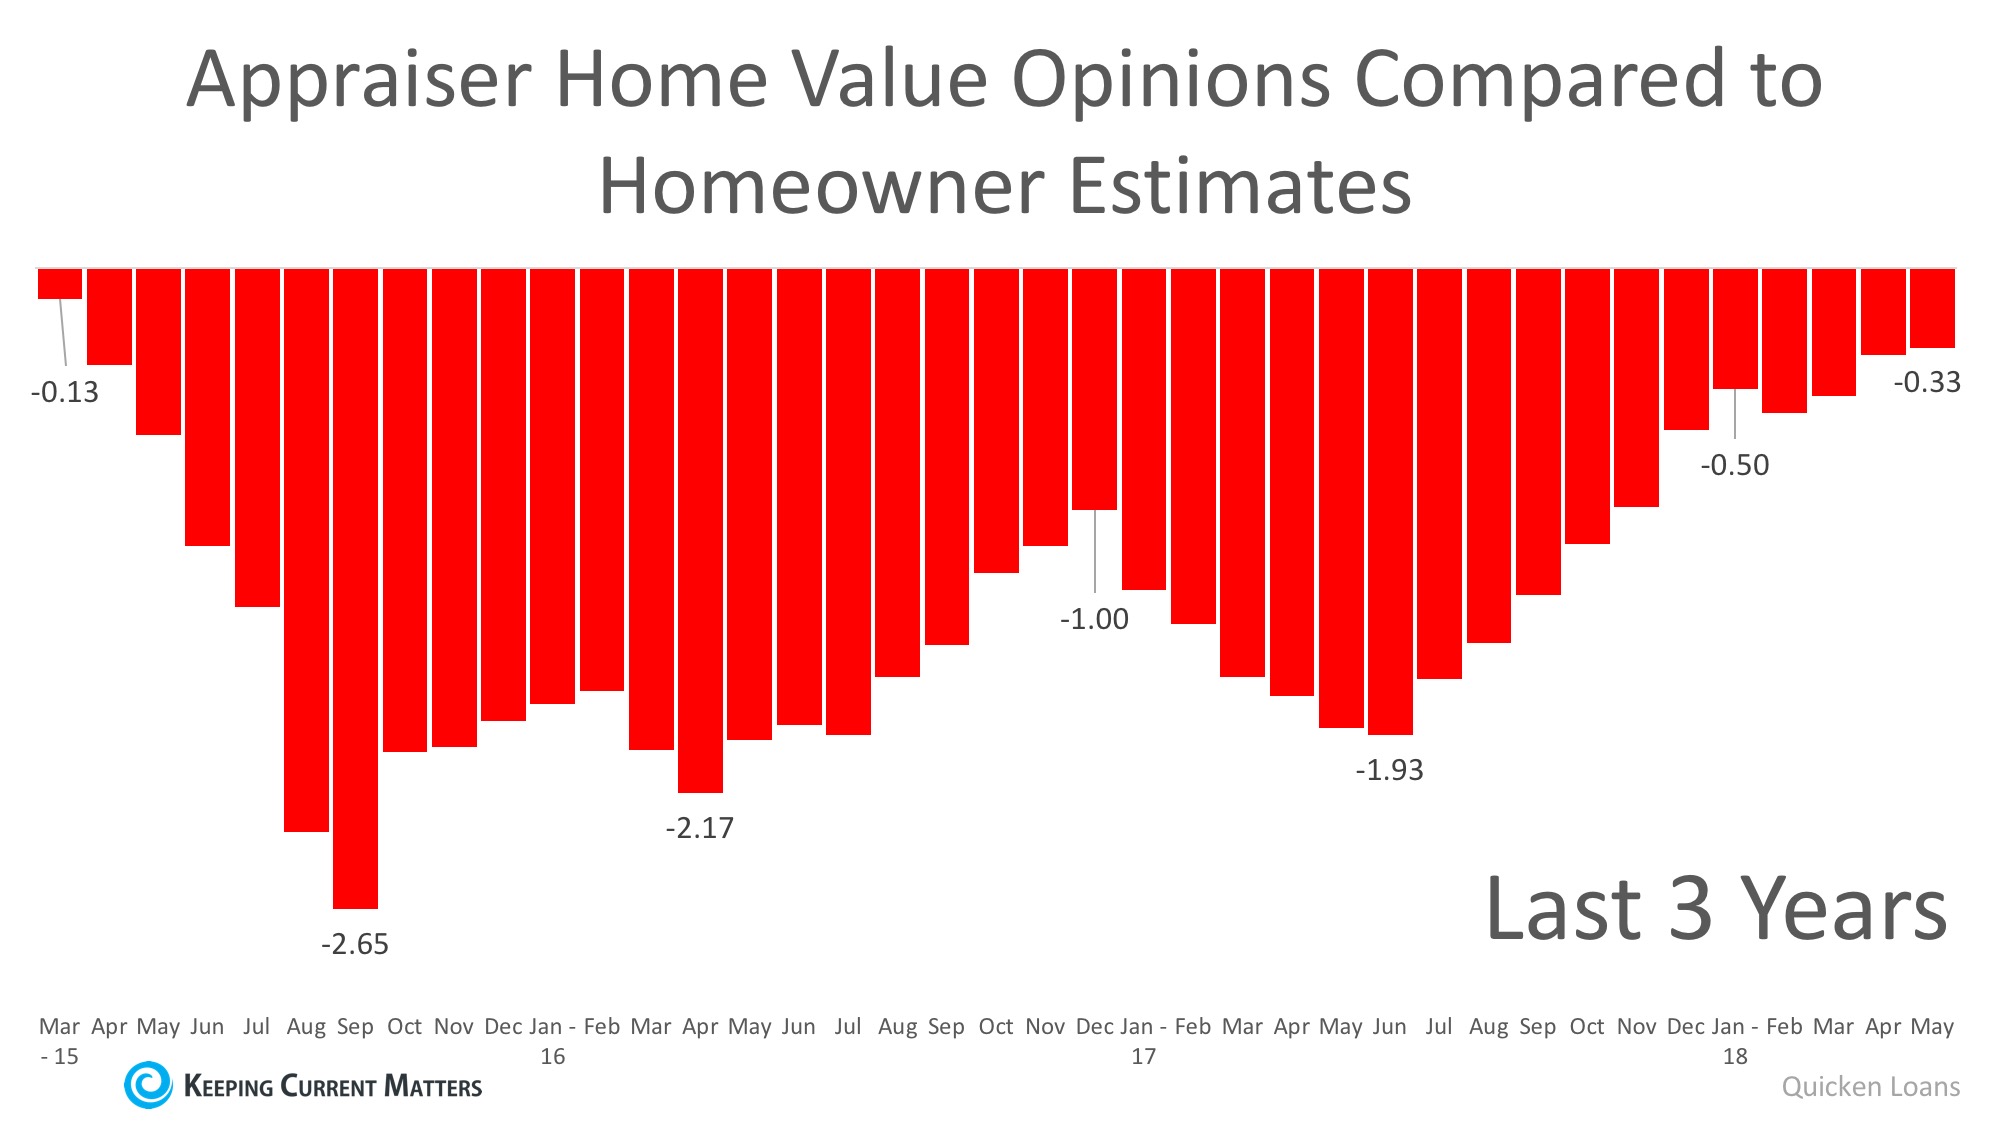 Appraiser Home Value Opinion vs. Homeowner Estimates